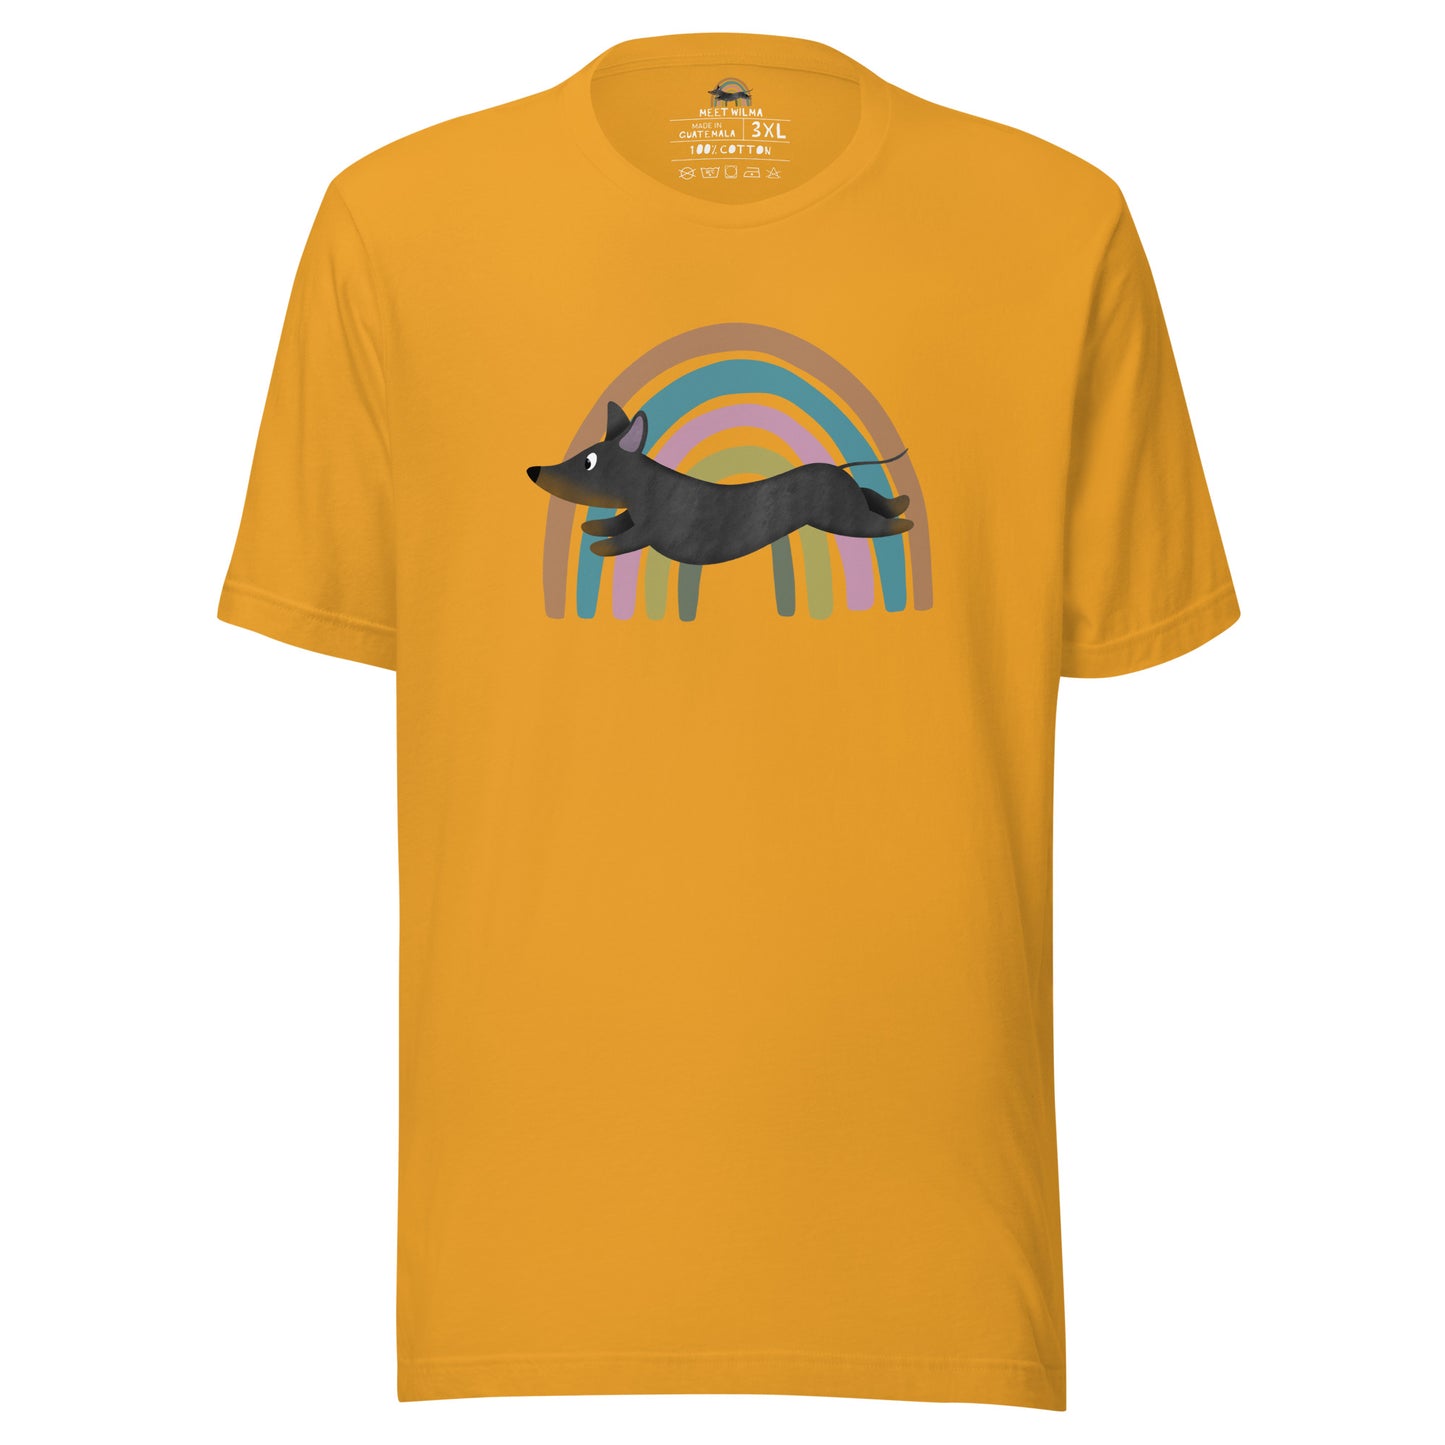 Unisex Shirt "Rainbow"